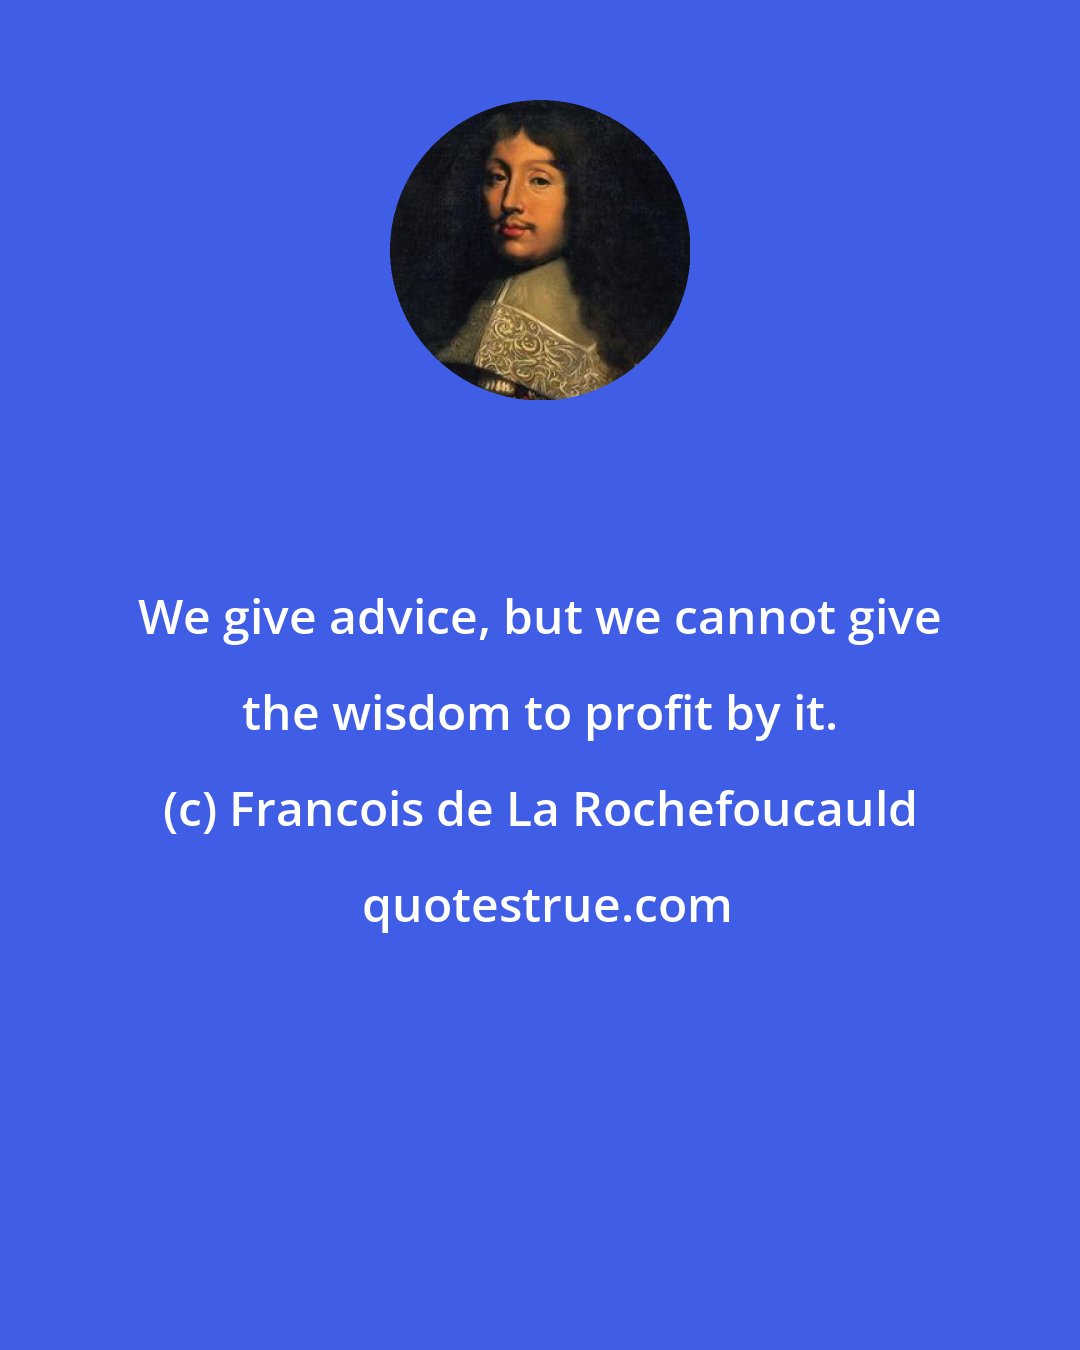 Francois de La Rochefoucauld: We give advice, but we cannot give the wisdom to profit by it.